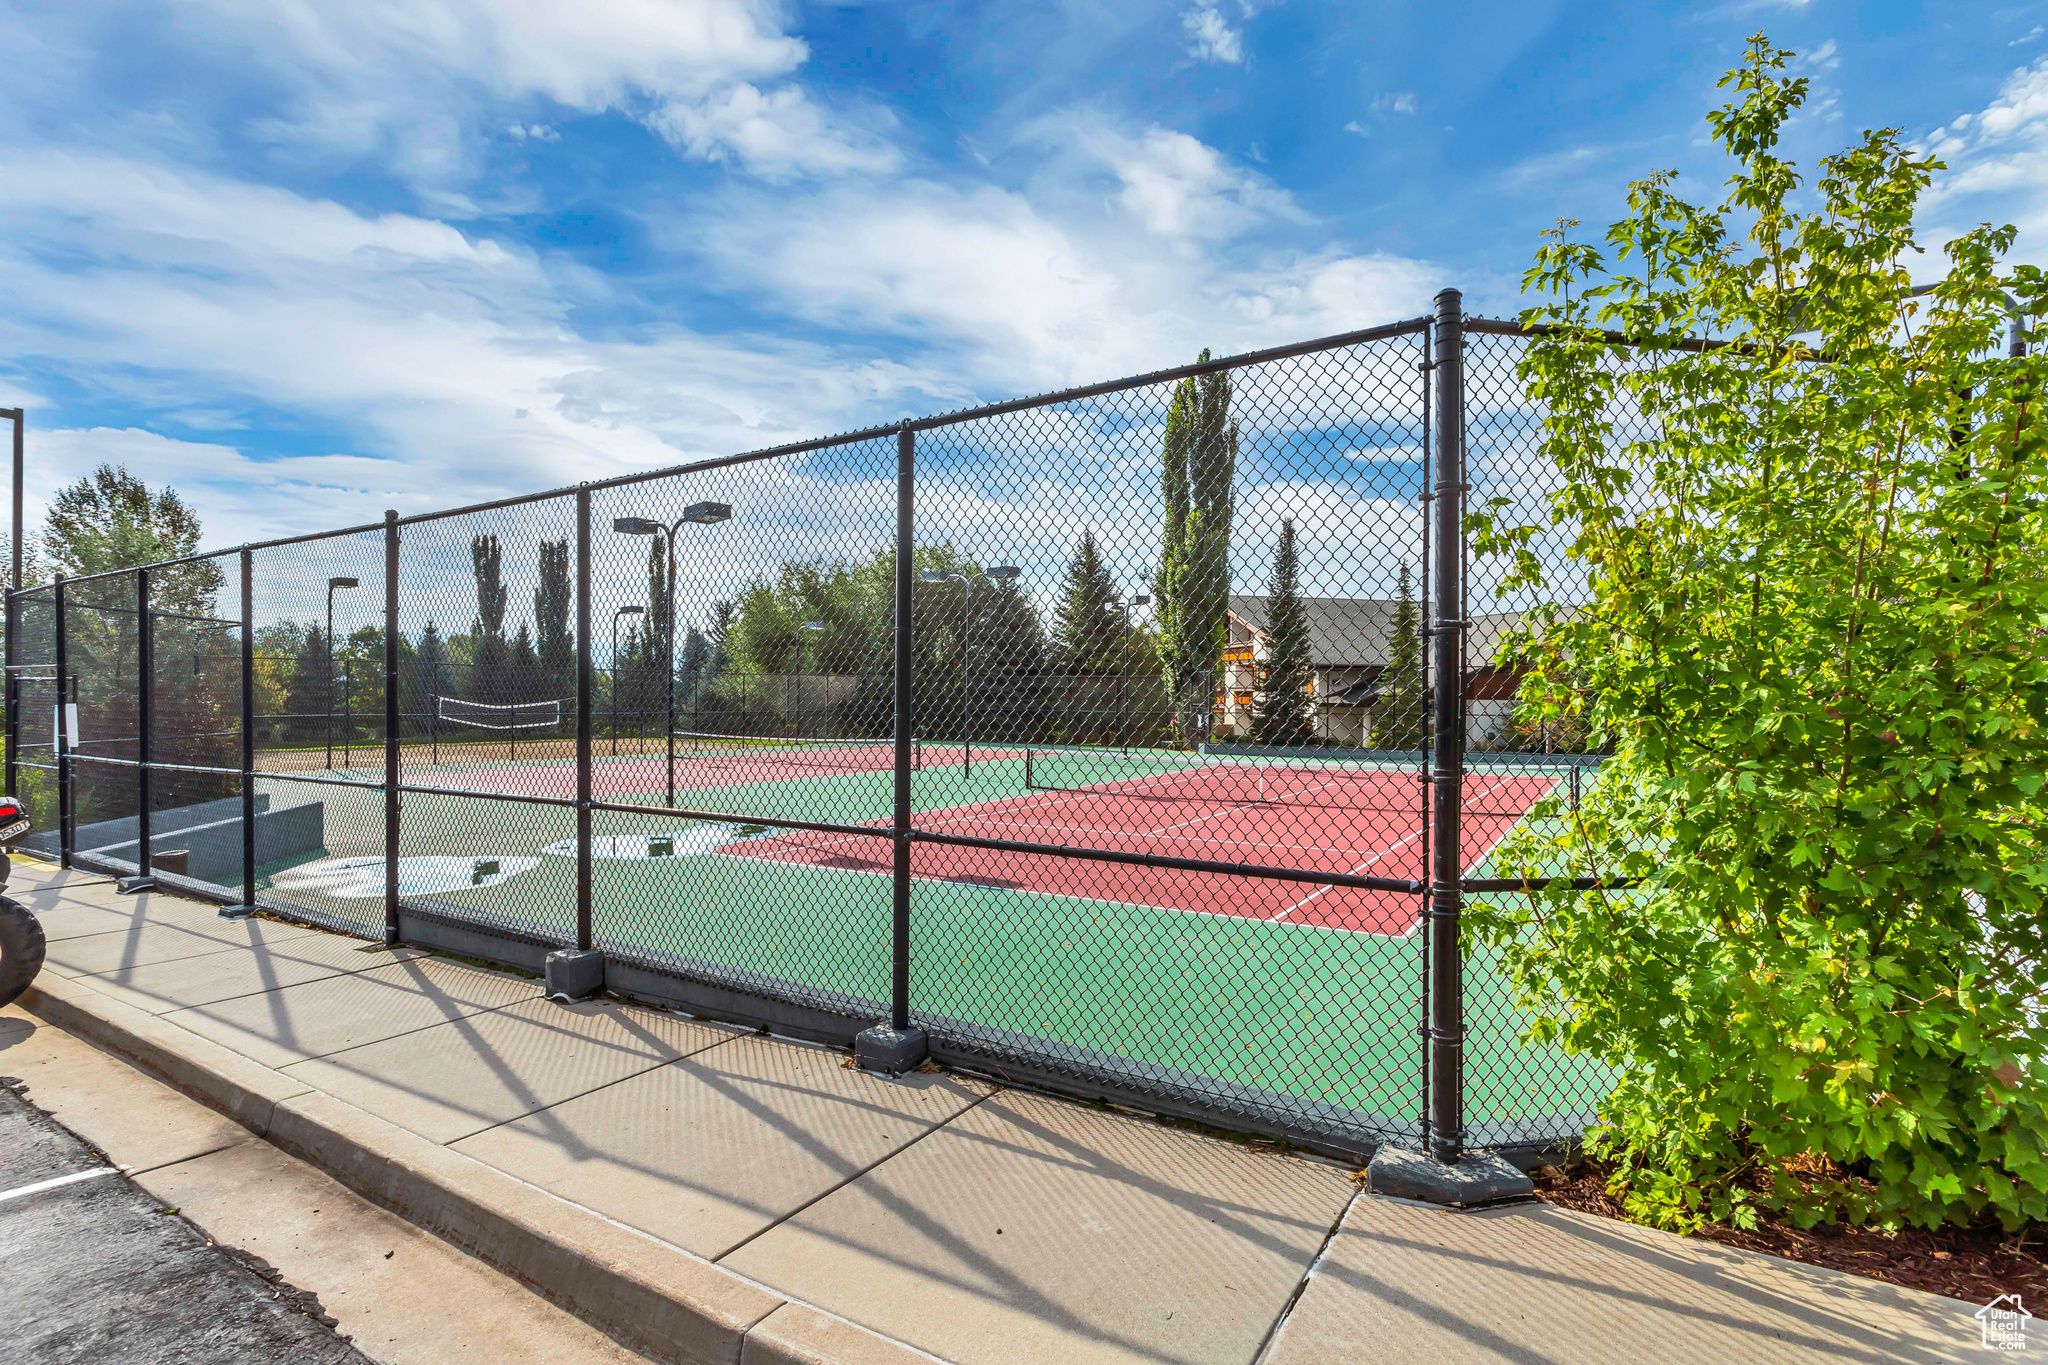 View of tennis court featuring basketball hoop